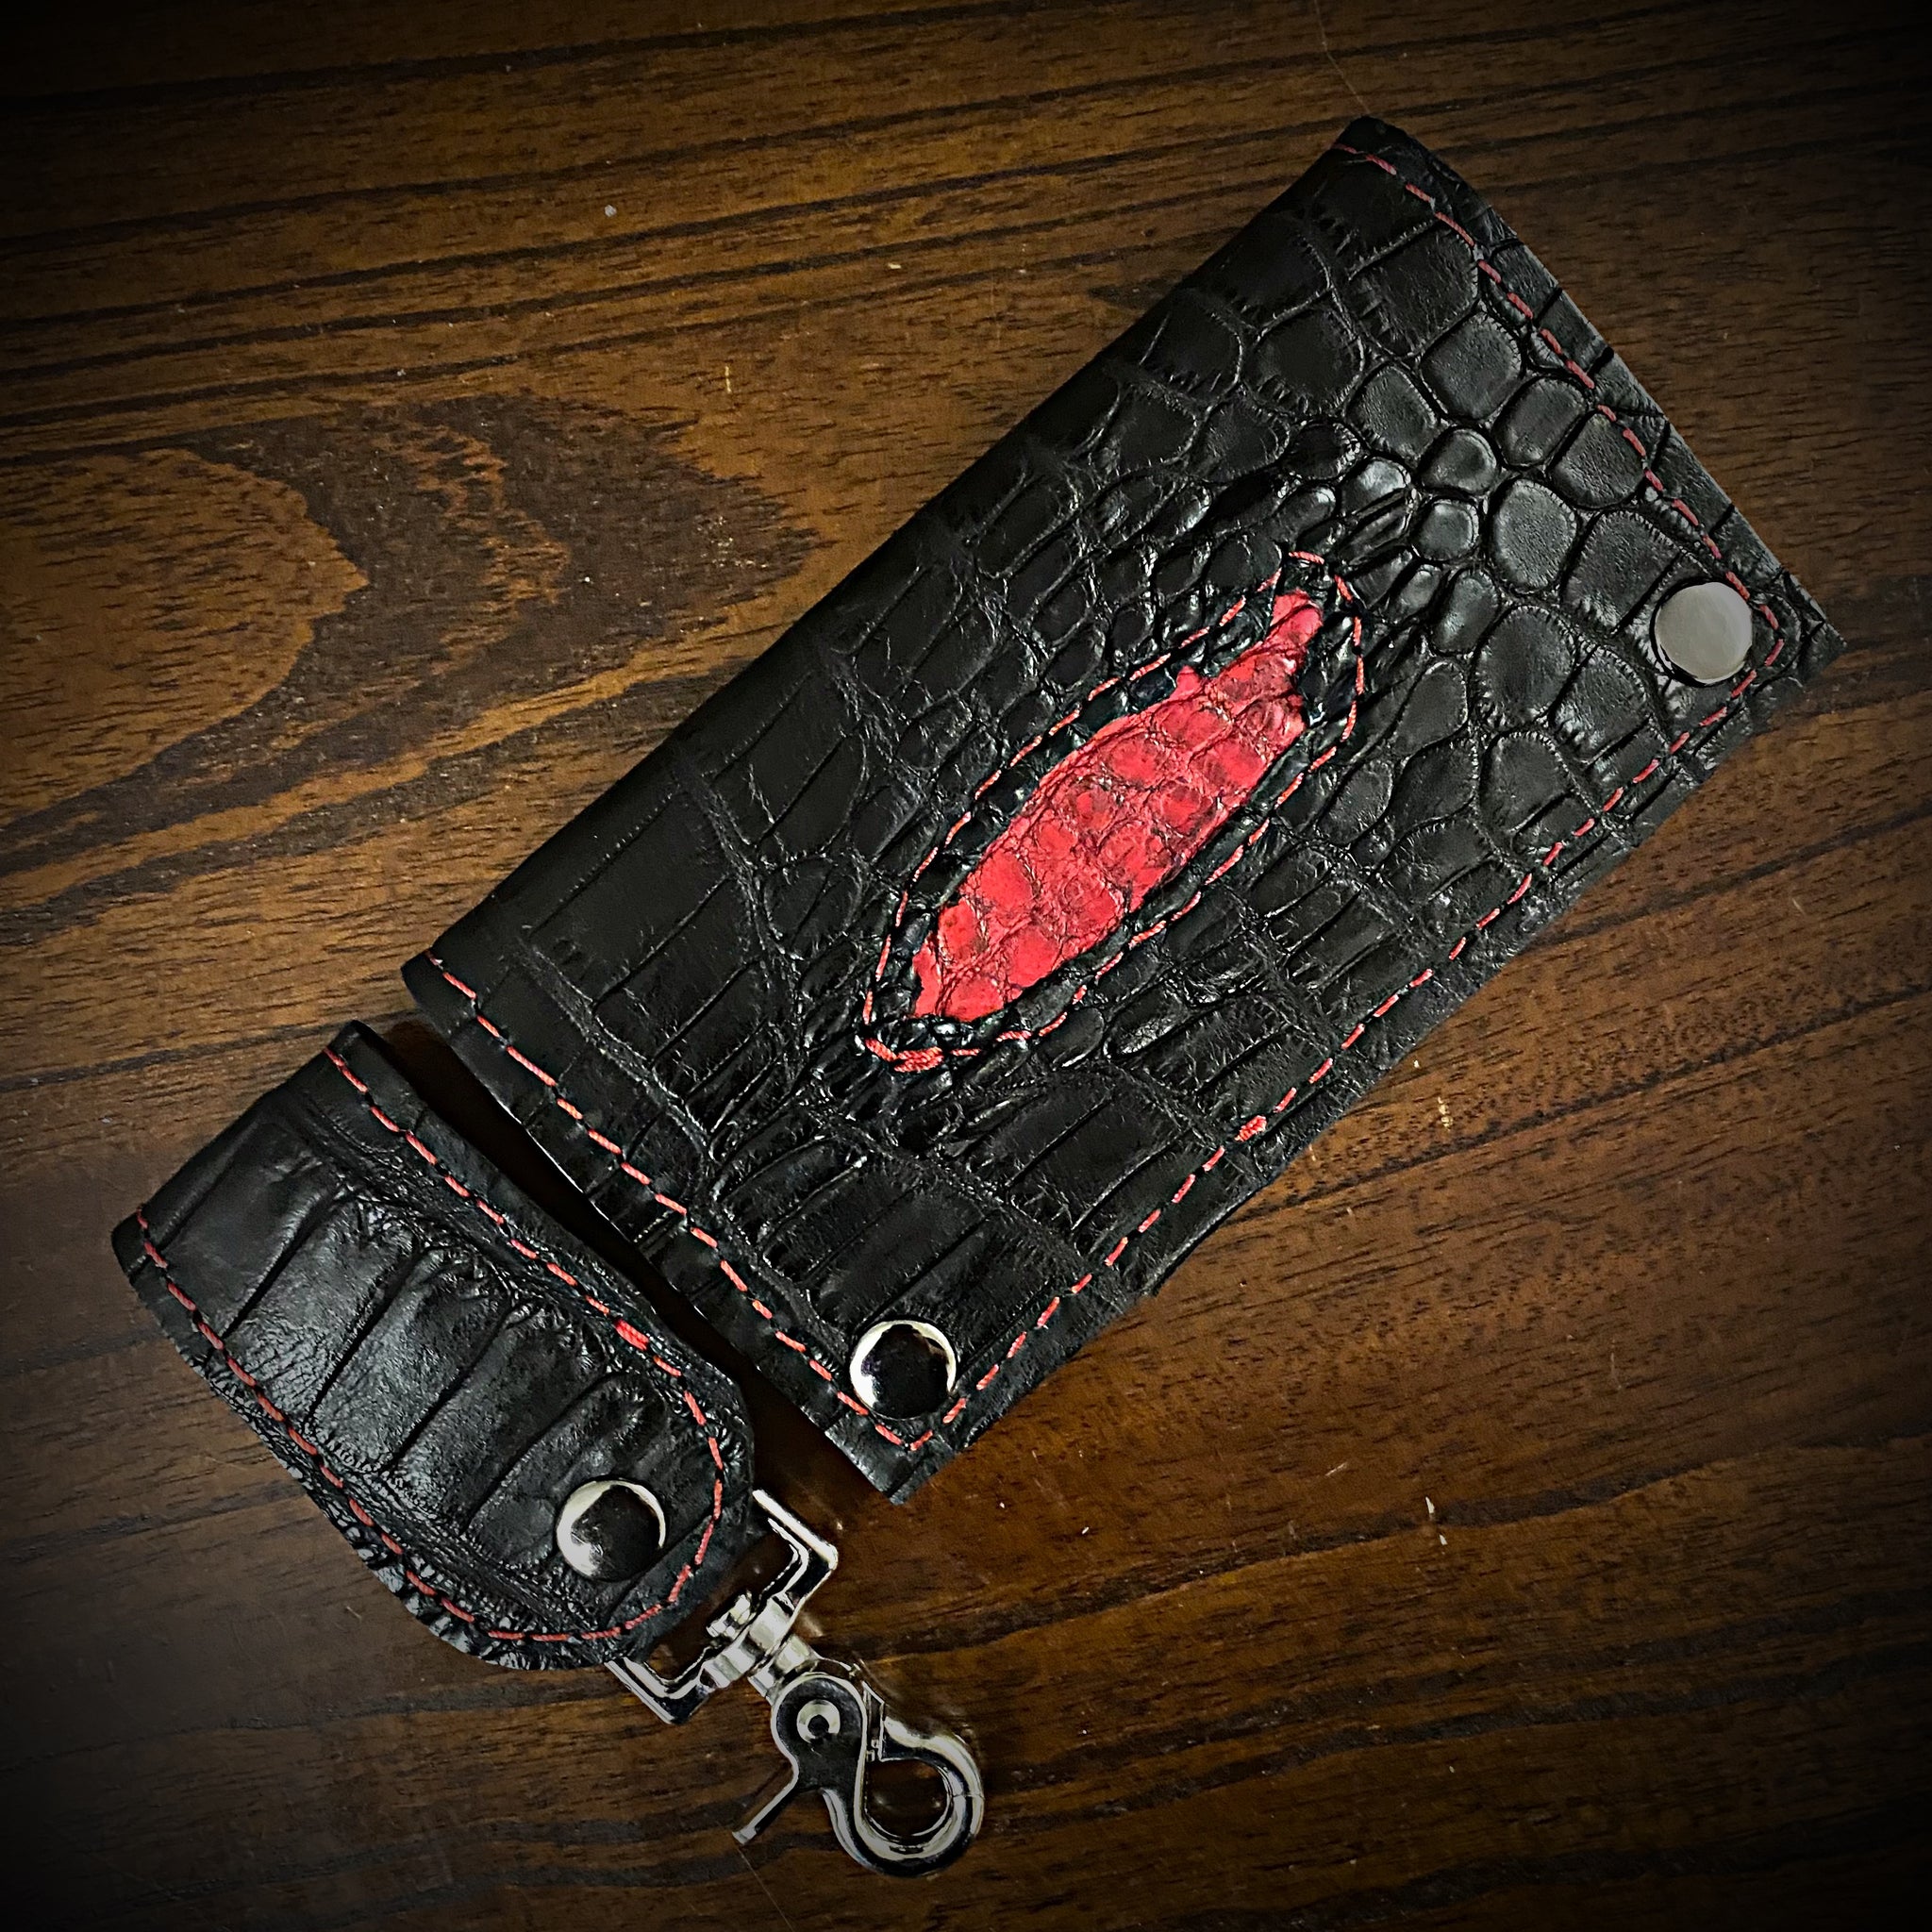 CHAIN WALLET Handmade Leather Chain Wallet Biker Wallet 